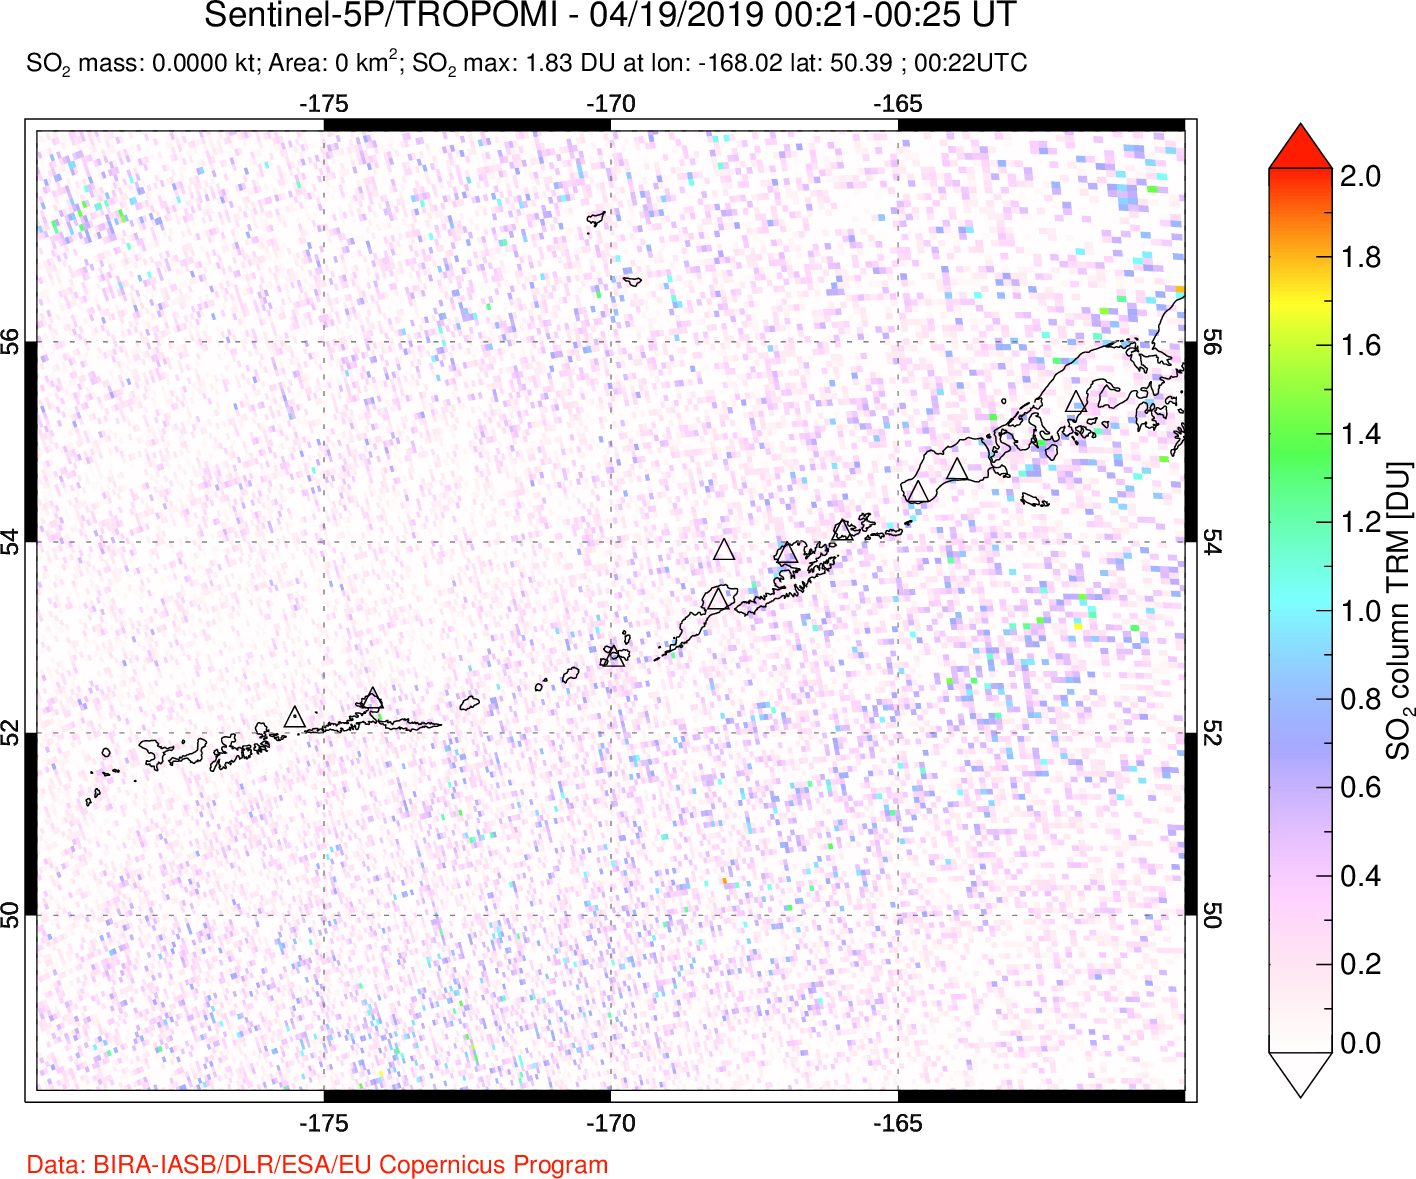 A sulfur dioxide image over Aleutian Islands, Alaska, USA on Apr 19, 2019.